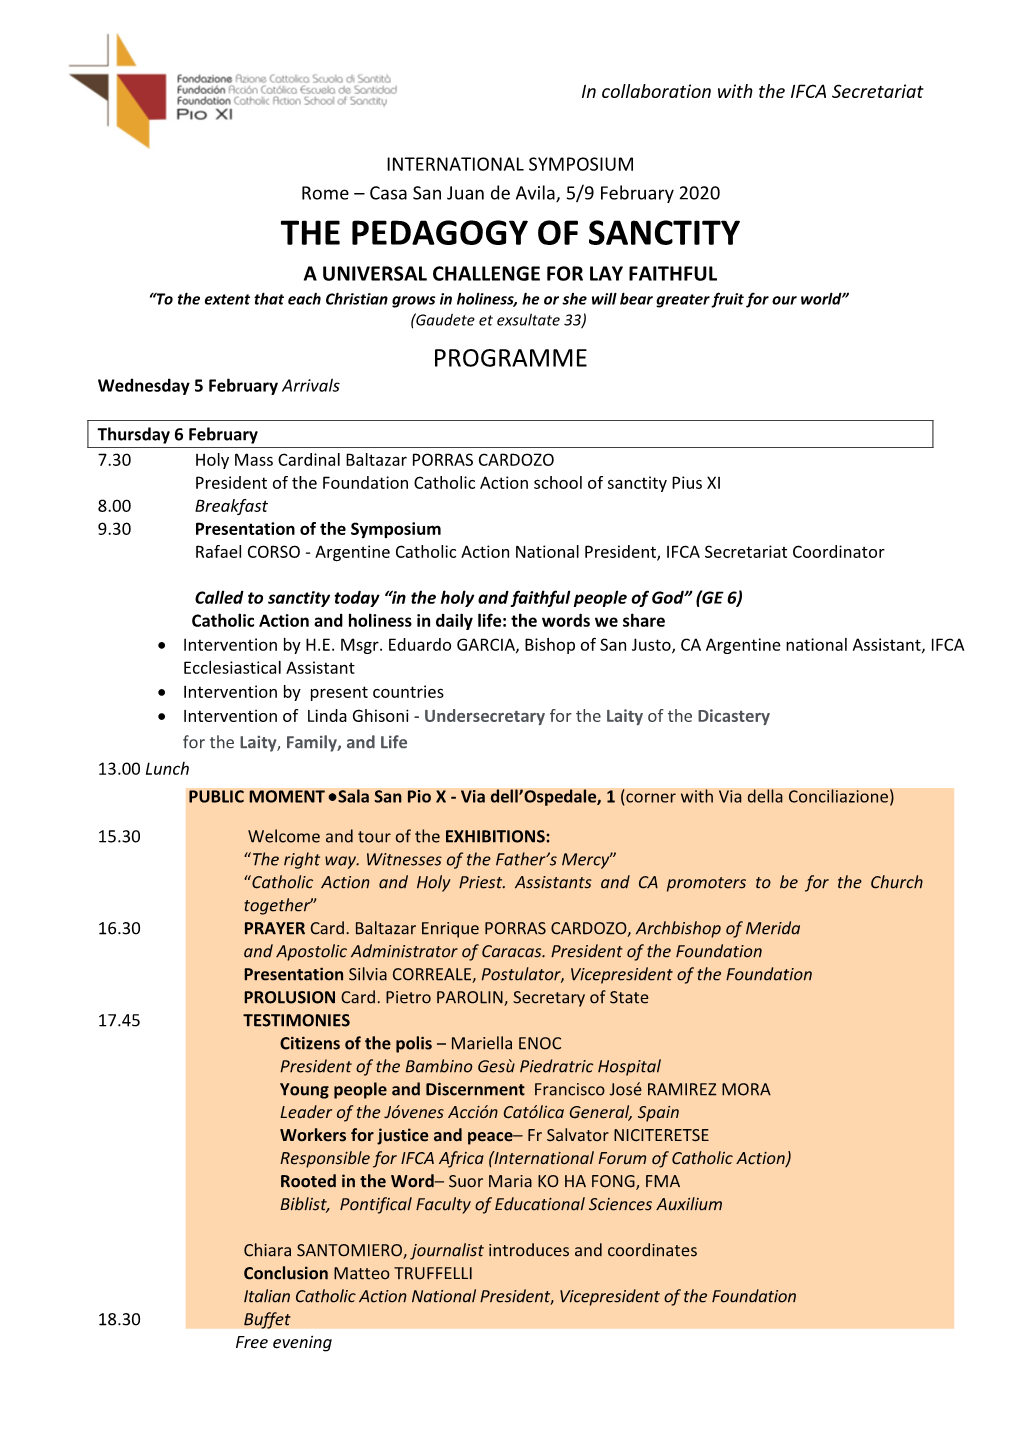 The Pedagogy of Sanctity